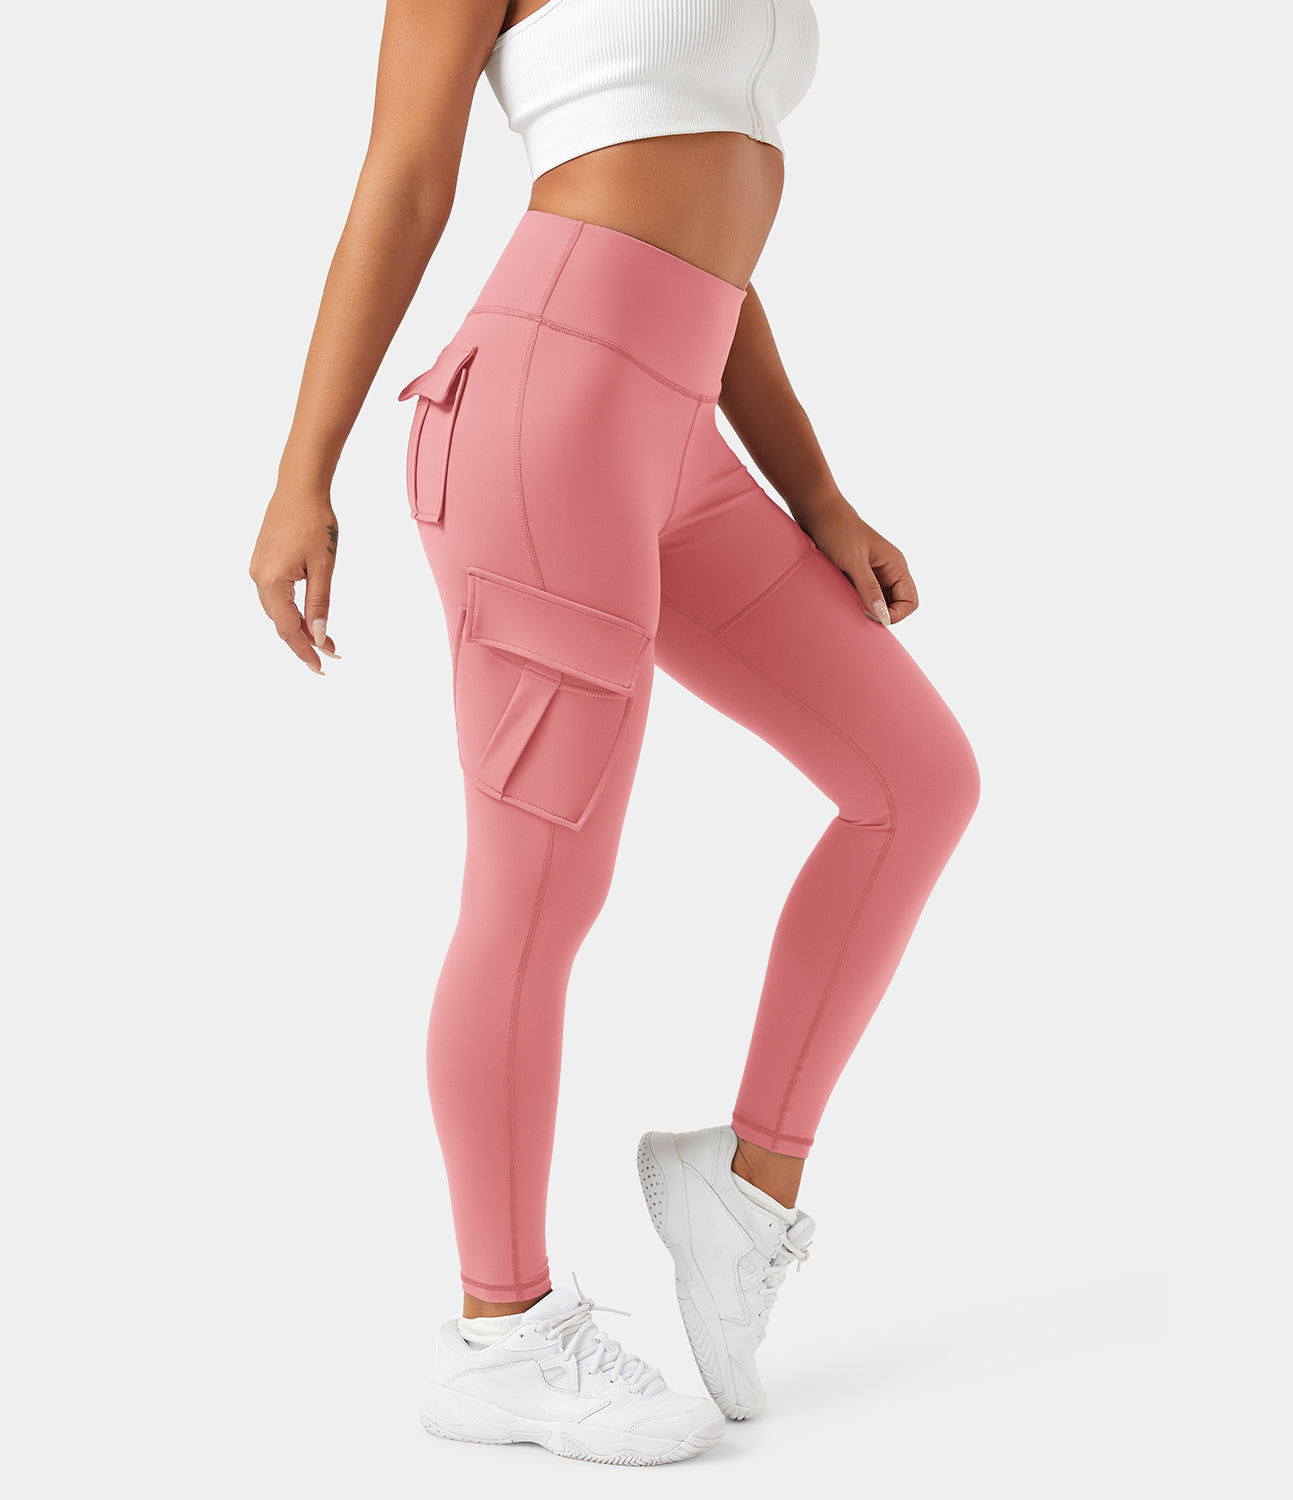 19% Discount! Halara High Waisted Cargo Pocket Skinny Yoga 7/8 Leggings -  Candy Pink - XL gym leggings leggings with pockets leggings with butt lift  Halara. Global